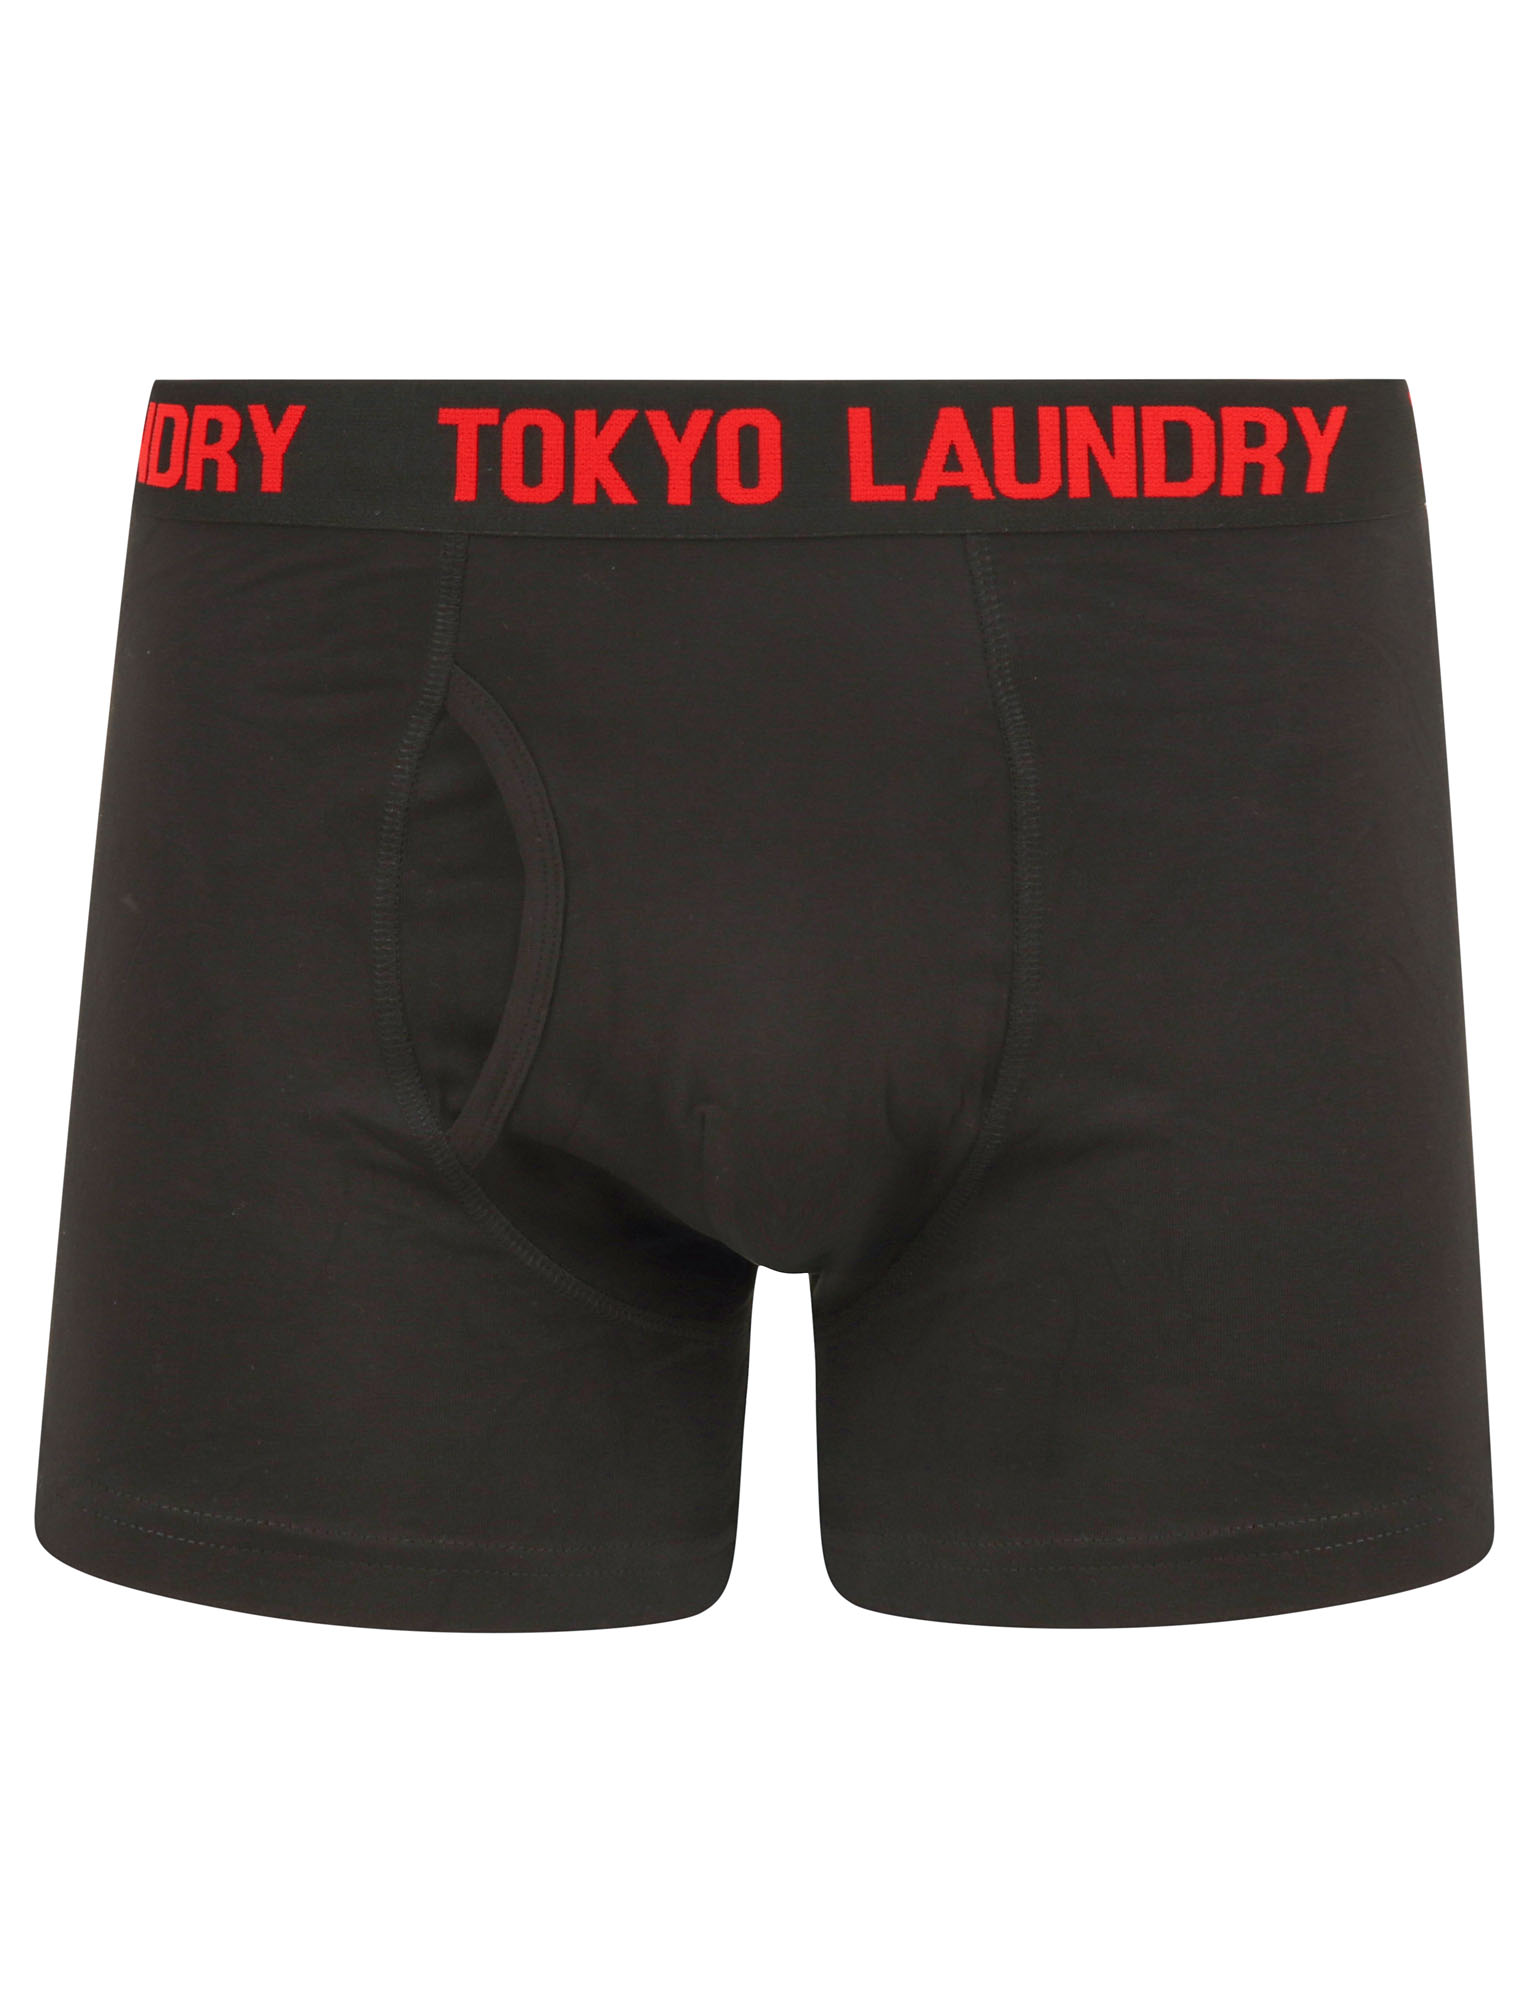 Tokyo Laundry Men's Booker Two Pack Boxer Shorts Set Black Boxers ...